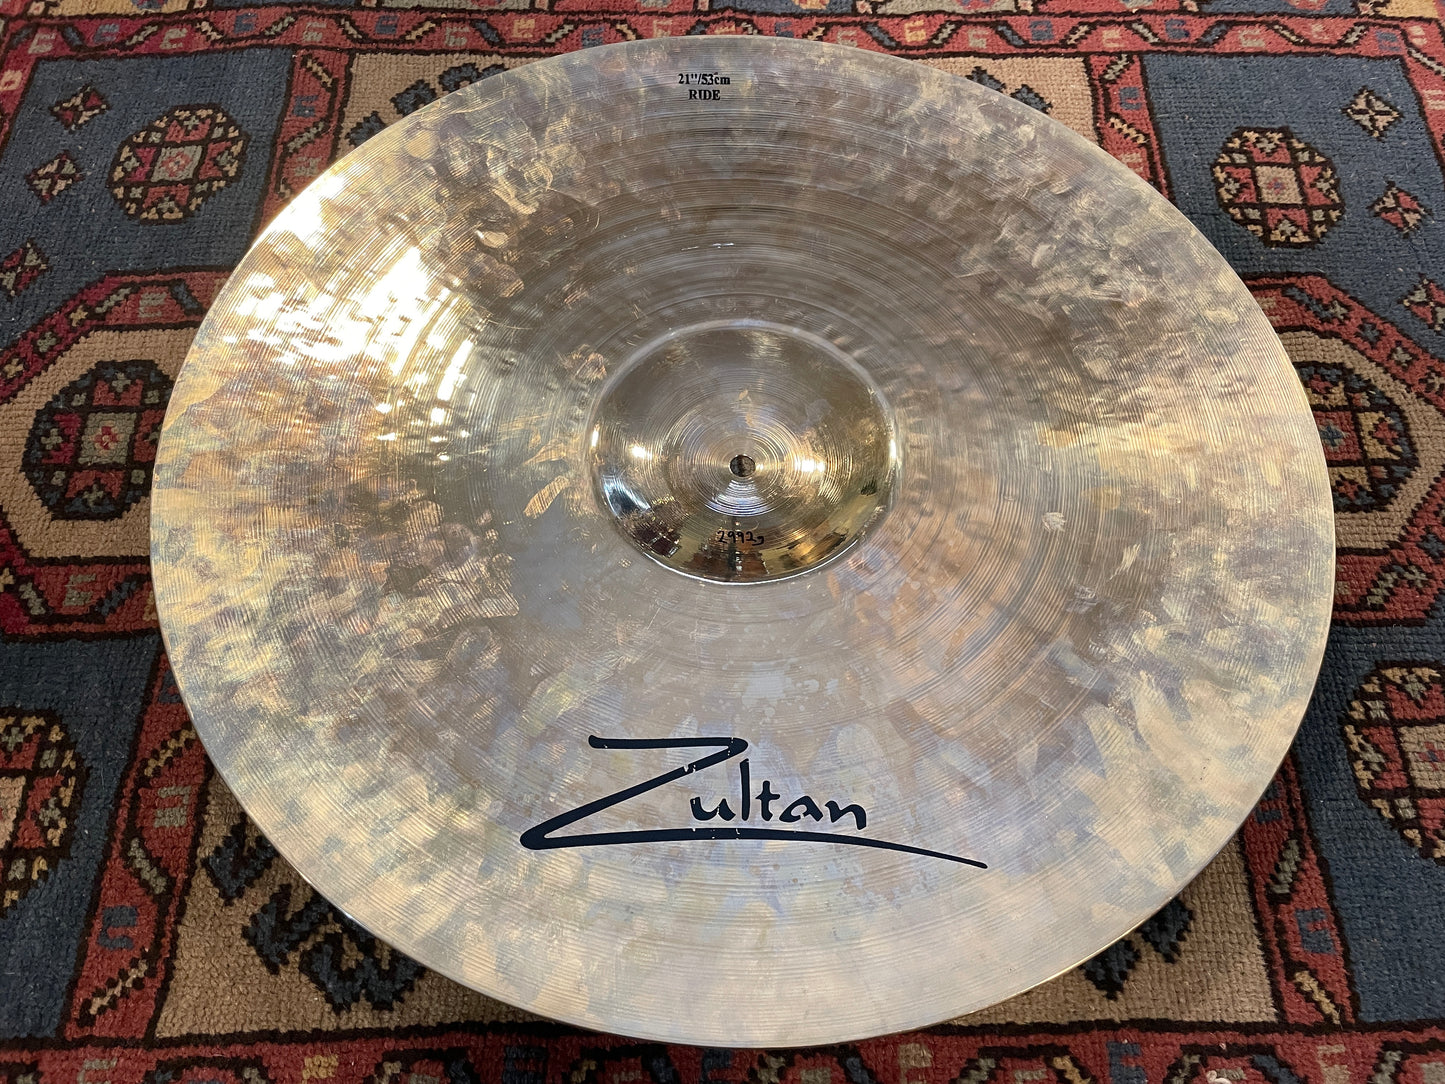 21" Zultan Q Series Ride Cymbal 2992g